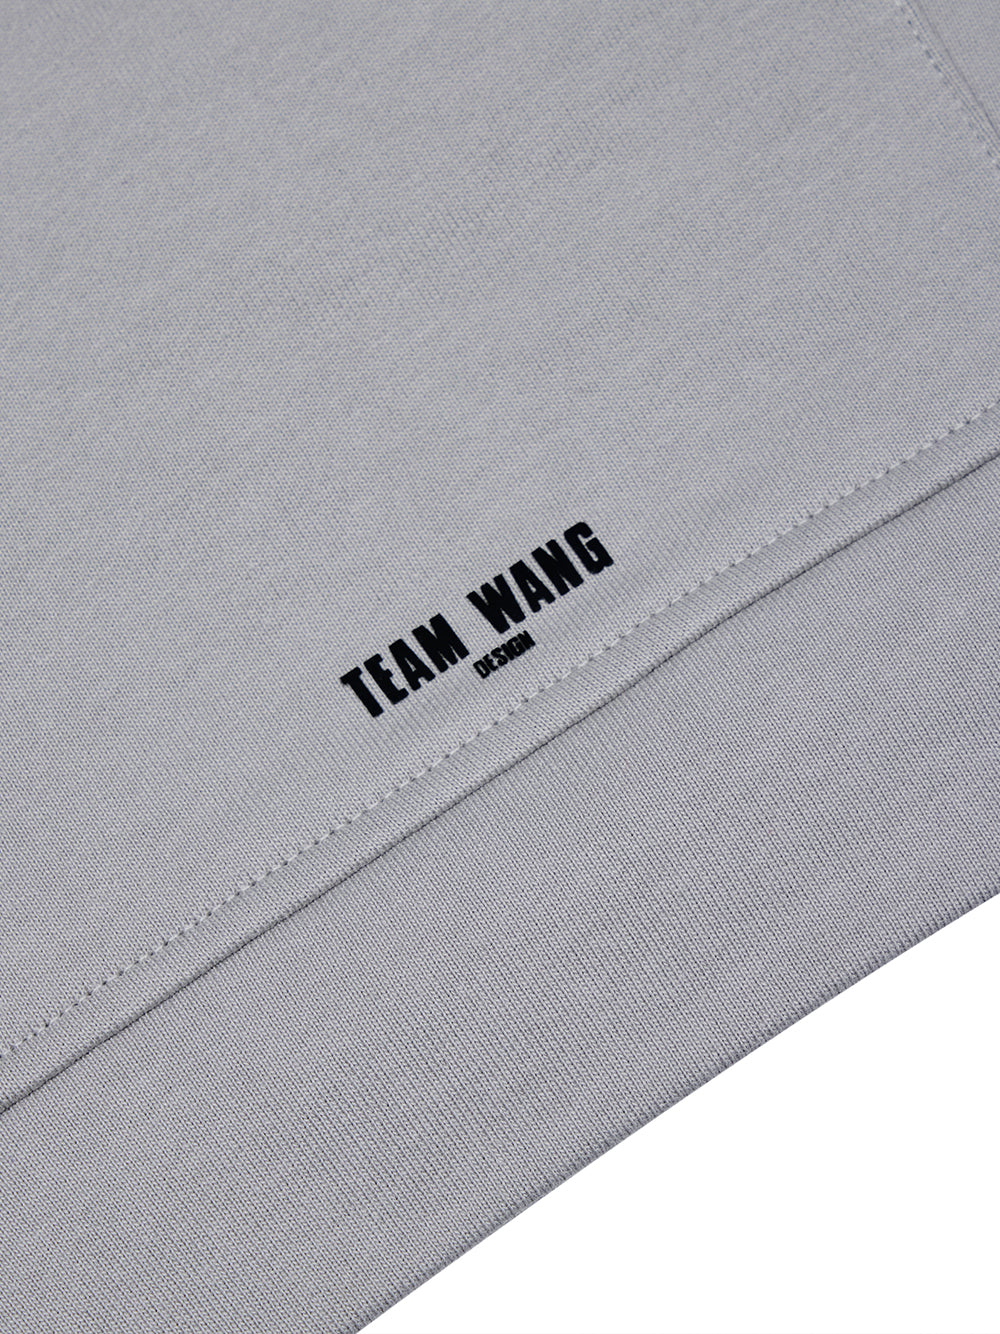 TEAM WANG design x CHUANG ASIA Zip up Cropped Casual Jacket (Grey)